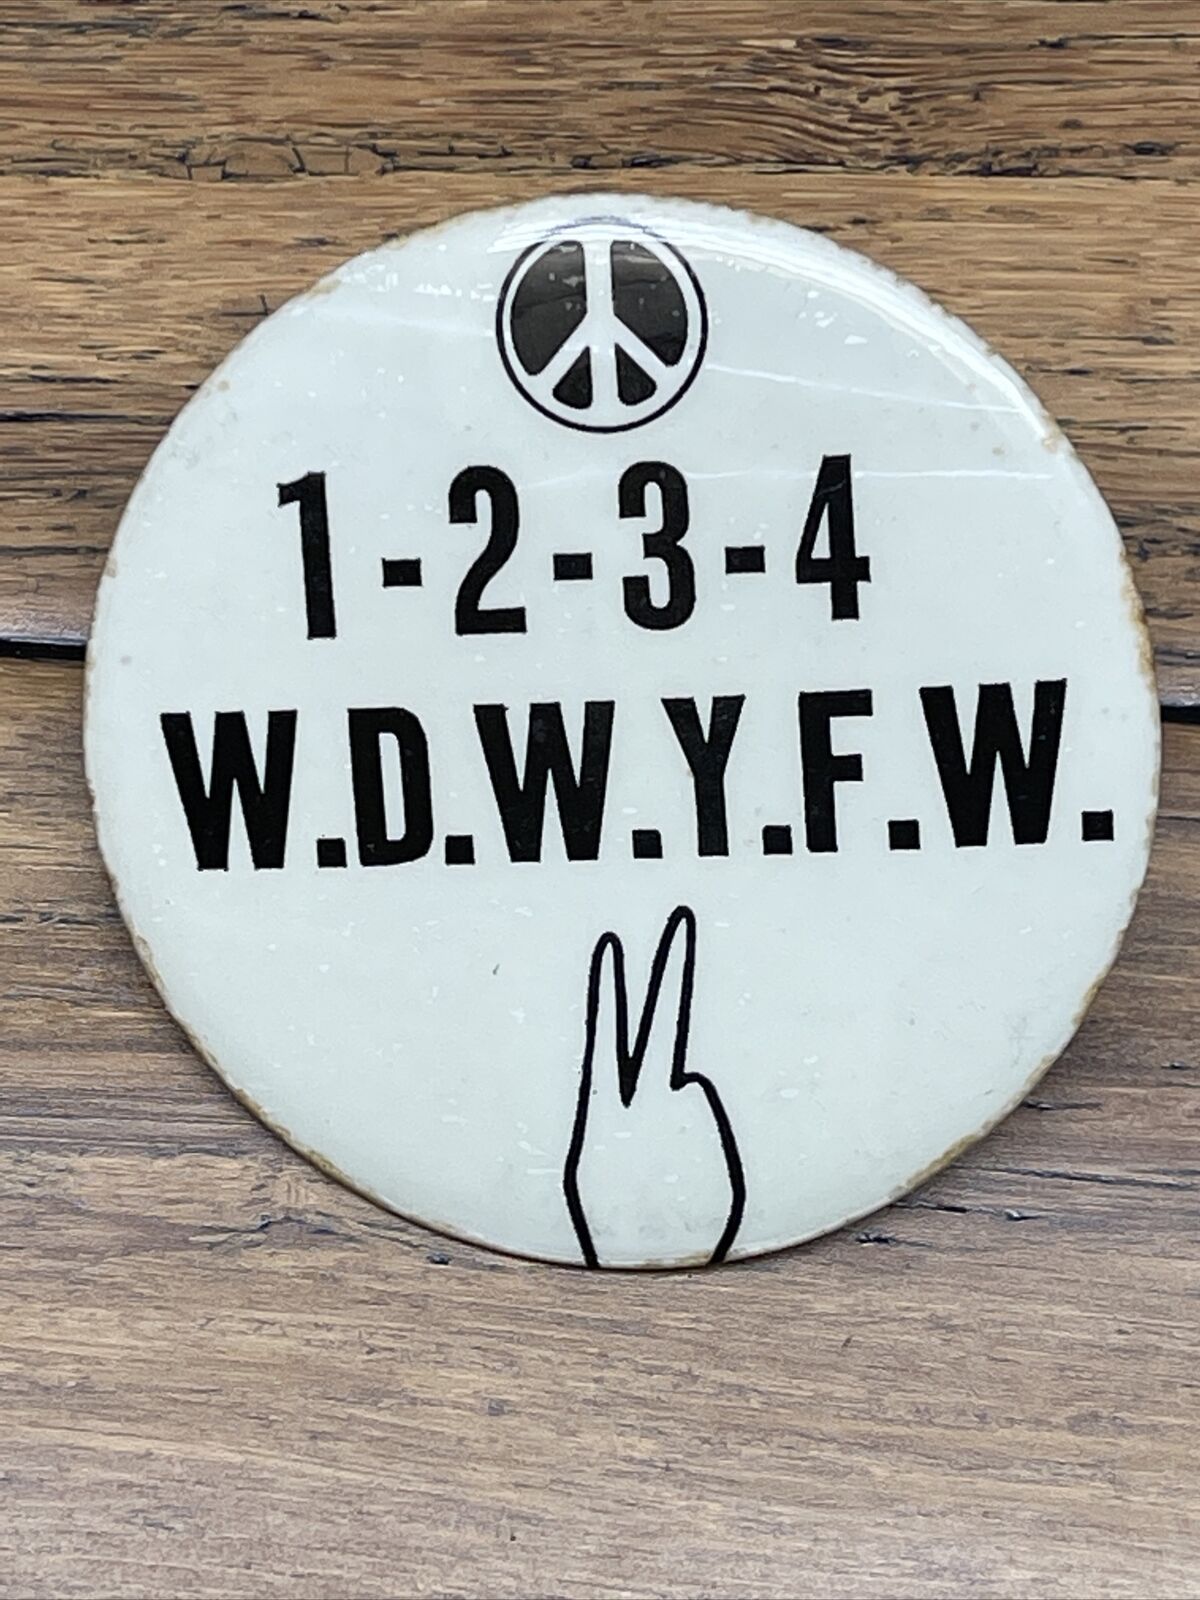 Lot Of 100 Vintage 1960s Vietnam War Protest Buttons 1-2-3-4 W.D.W.Y.F.W  JD